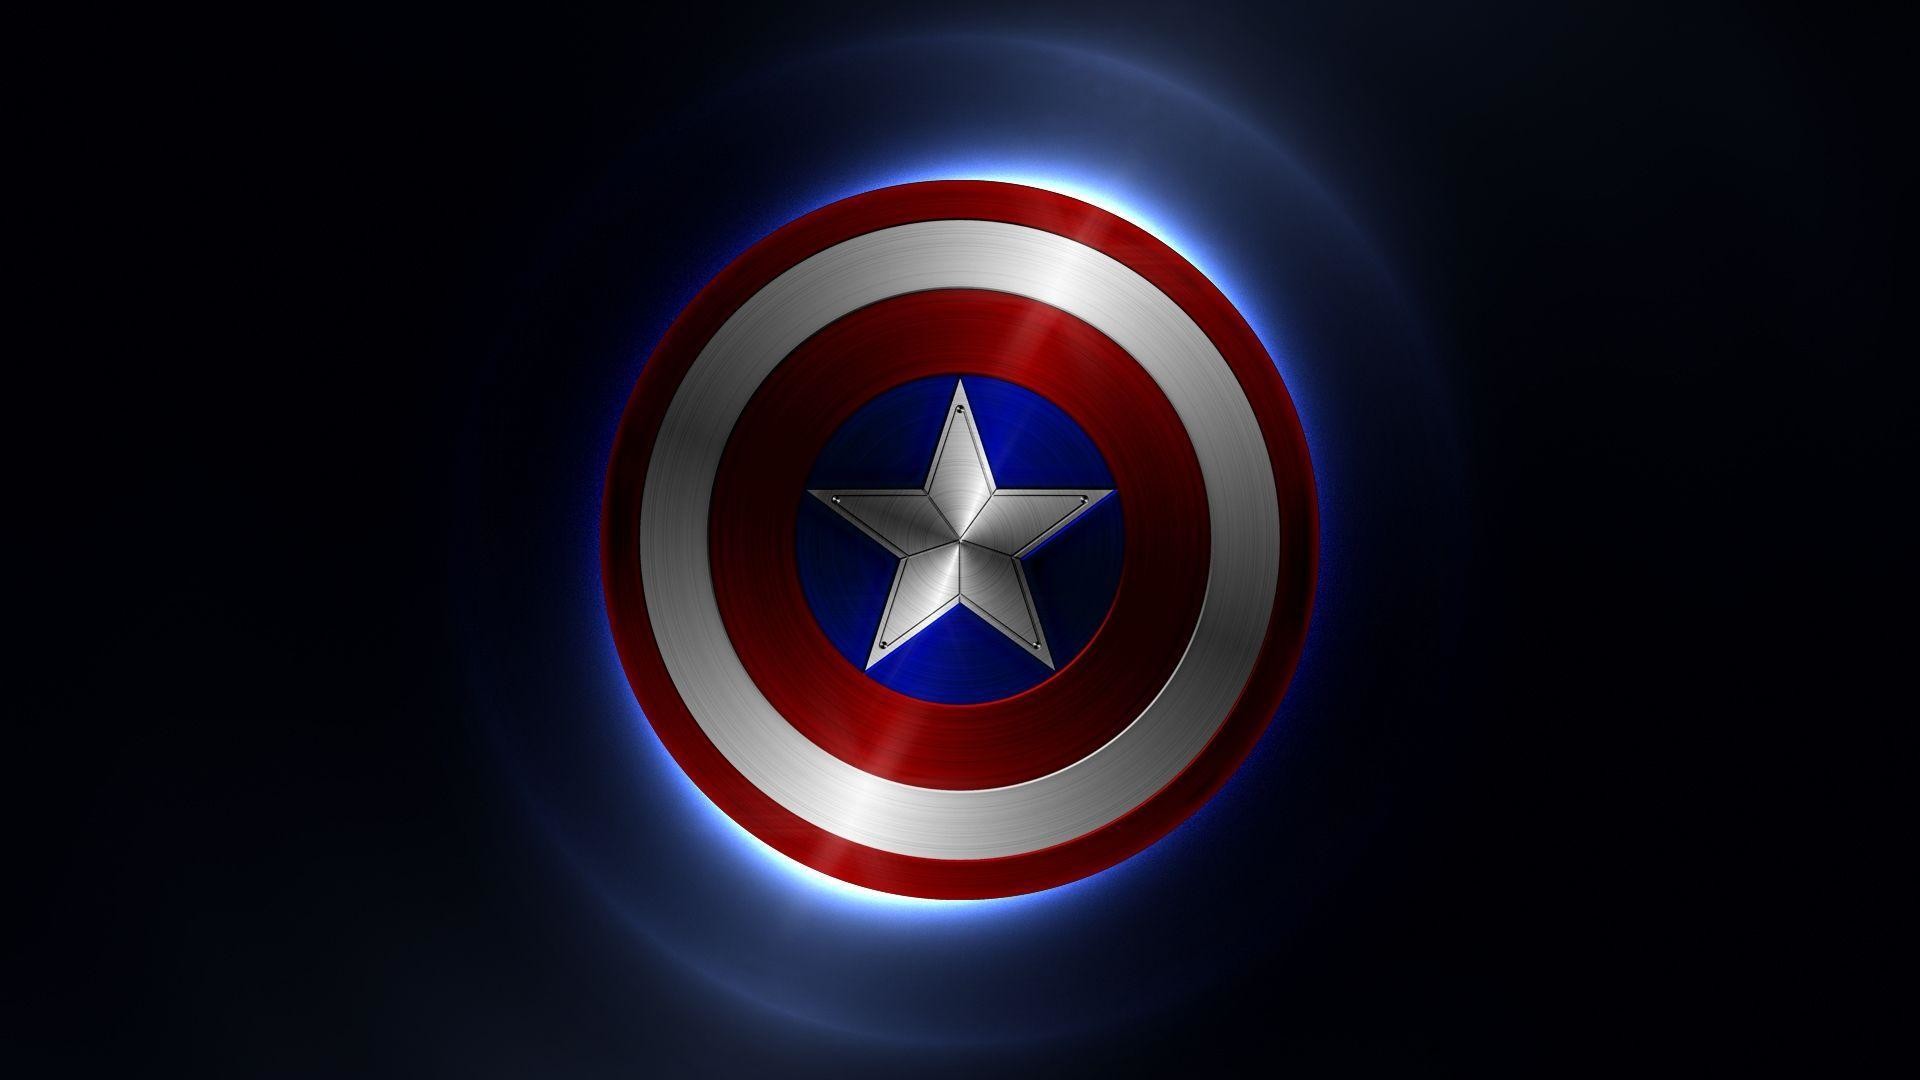 Wallpaper ID: 78674 / avengers endgame, iron man, captain america, thor,  2019 movies, movies, hd, 4k, superheroes free download